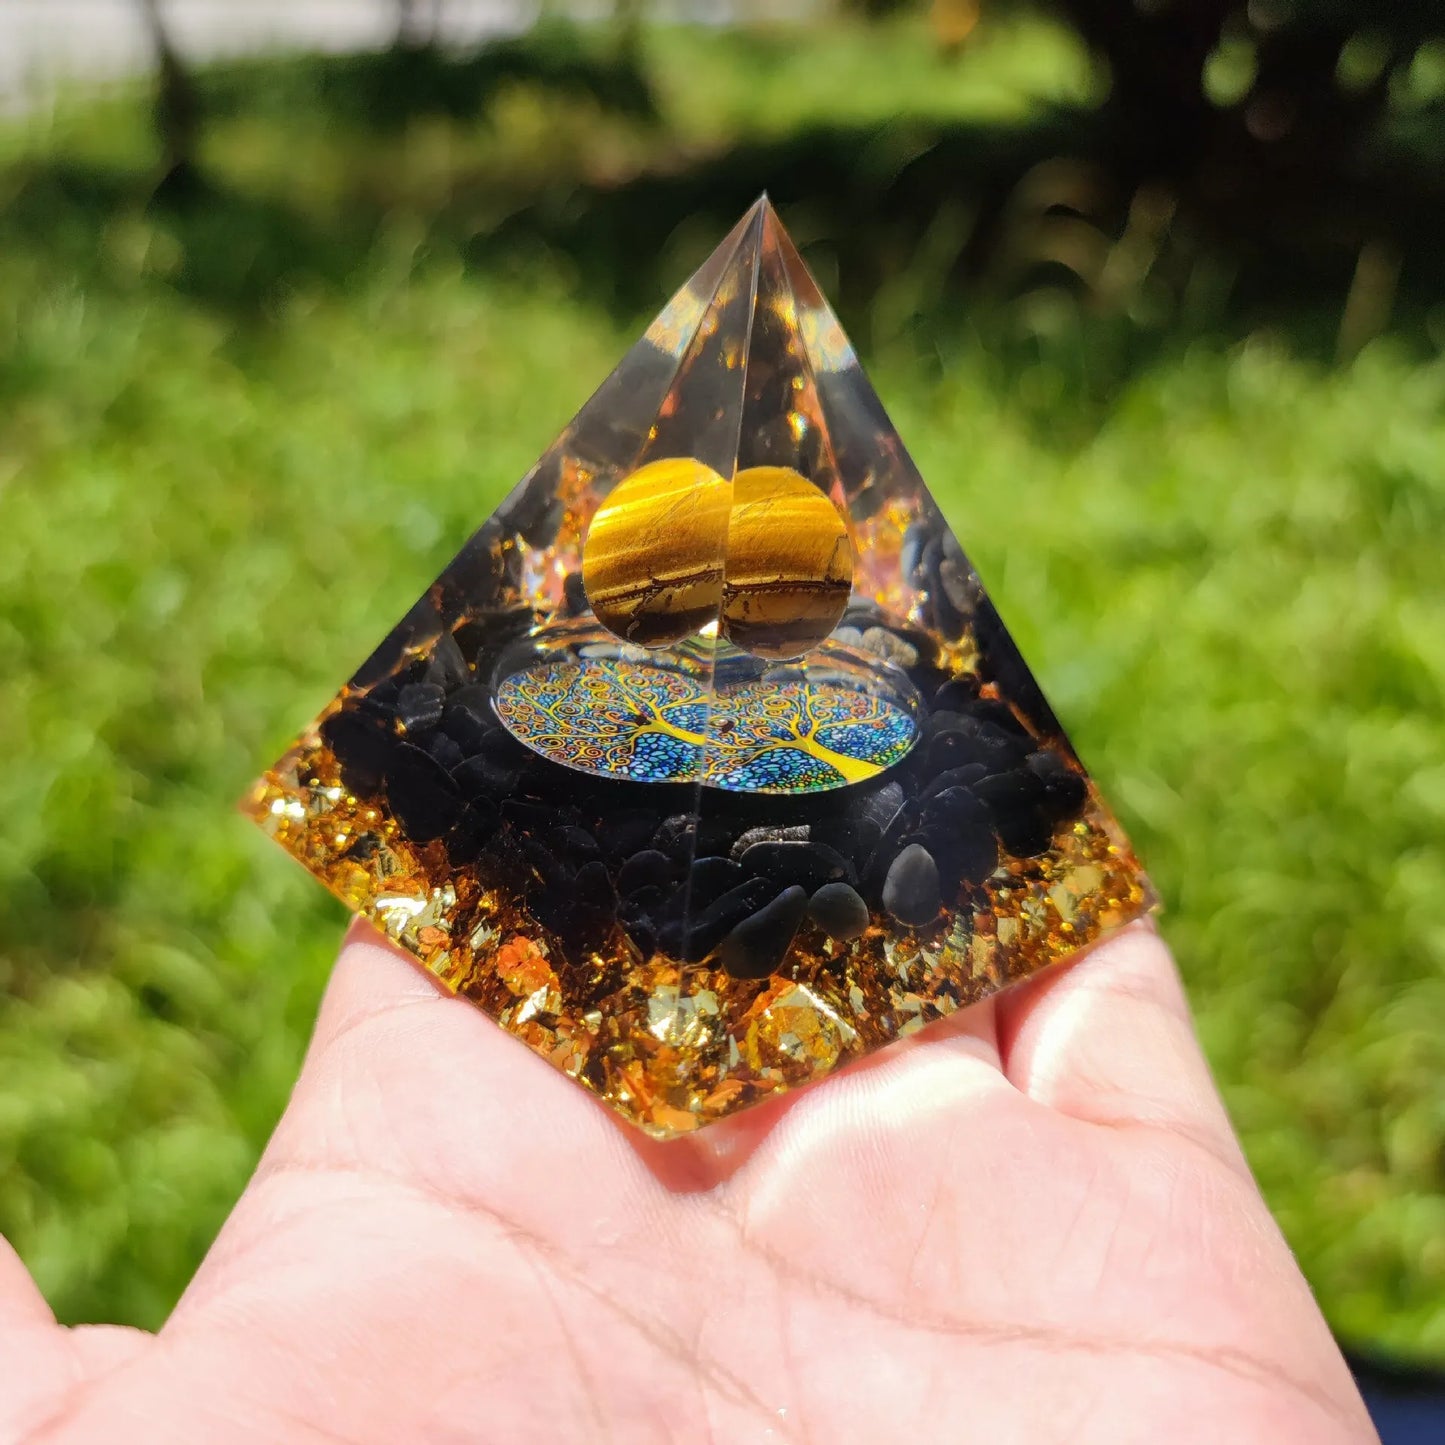 Energy Pyramid Orgonite Reiki Natural Amethyst Ball Healing Crystals Chakra Tool Ornaments Resin Stones Craft Kids Gift Pyramid